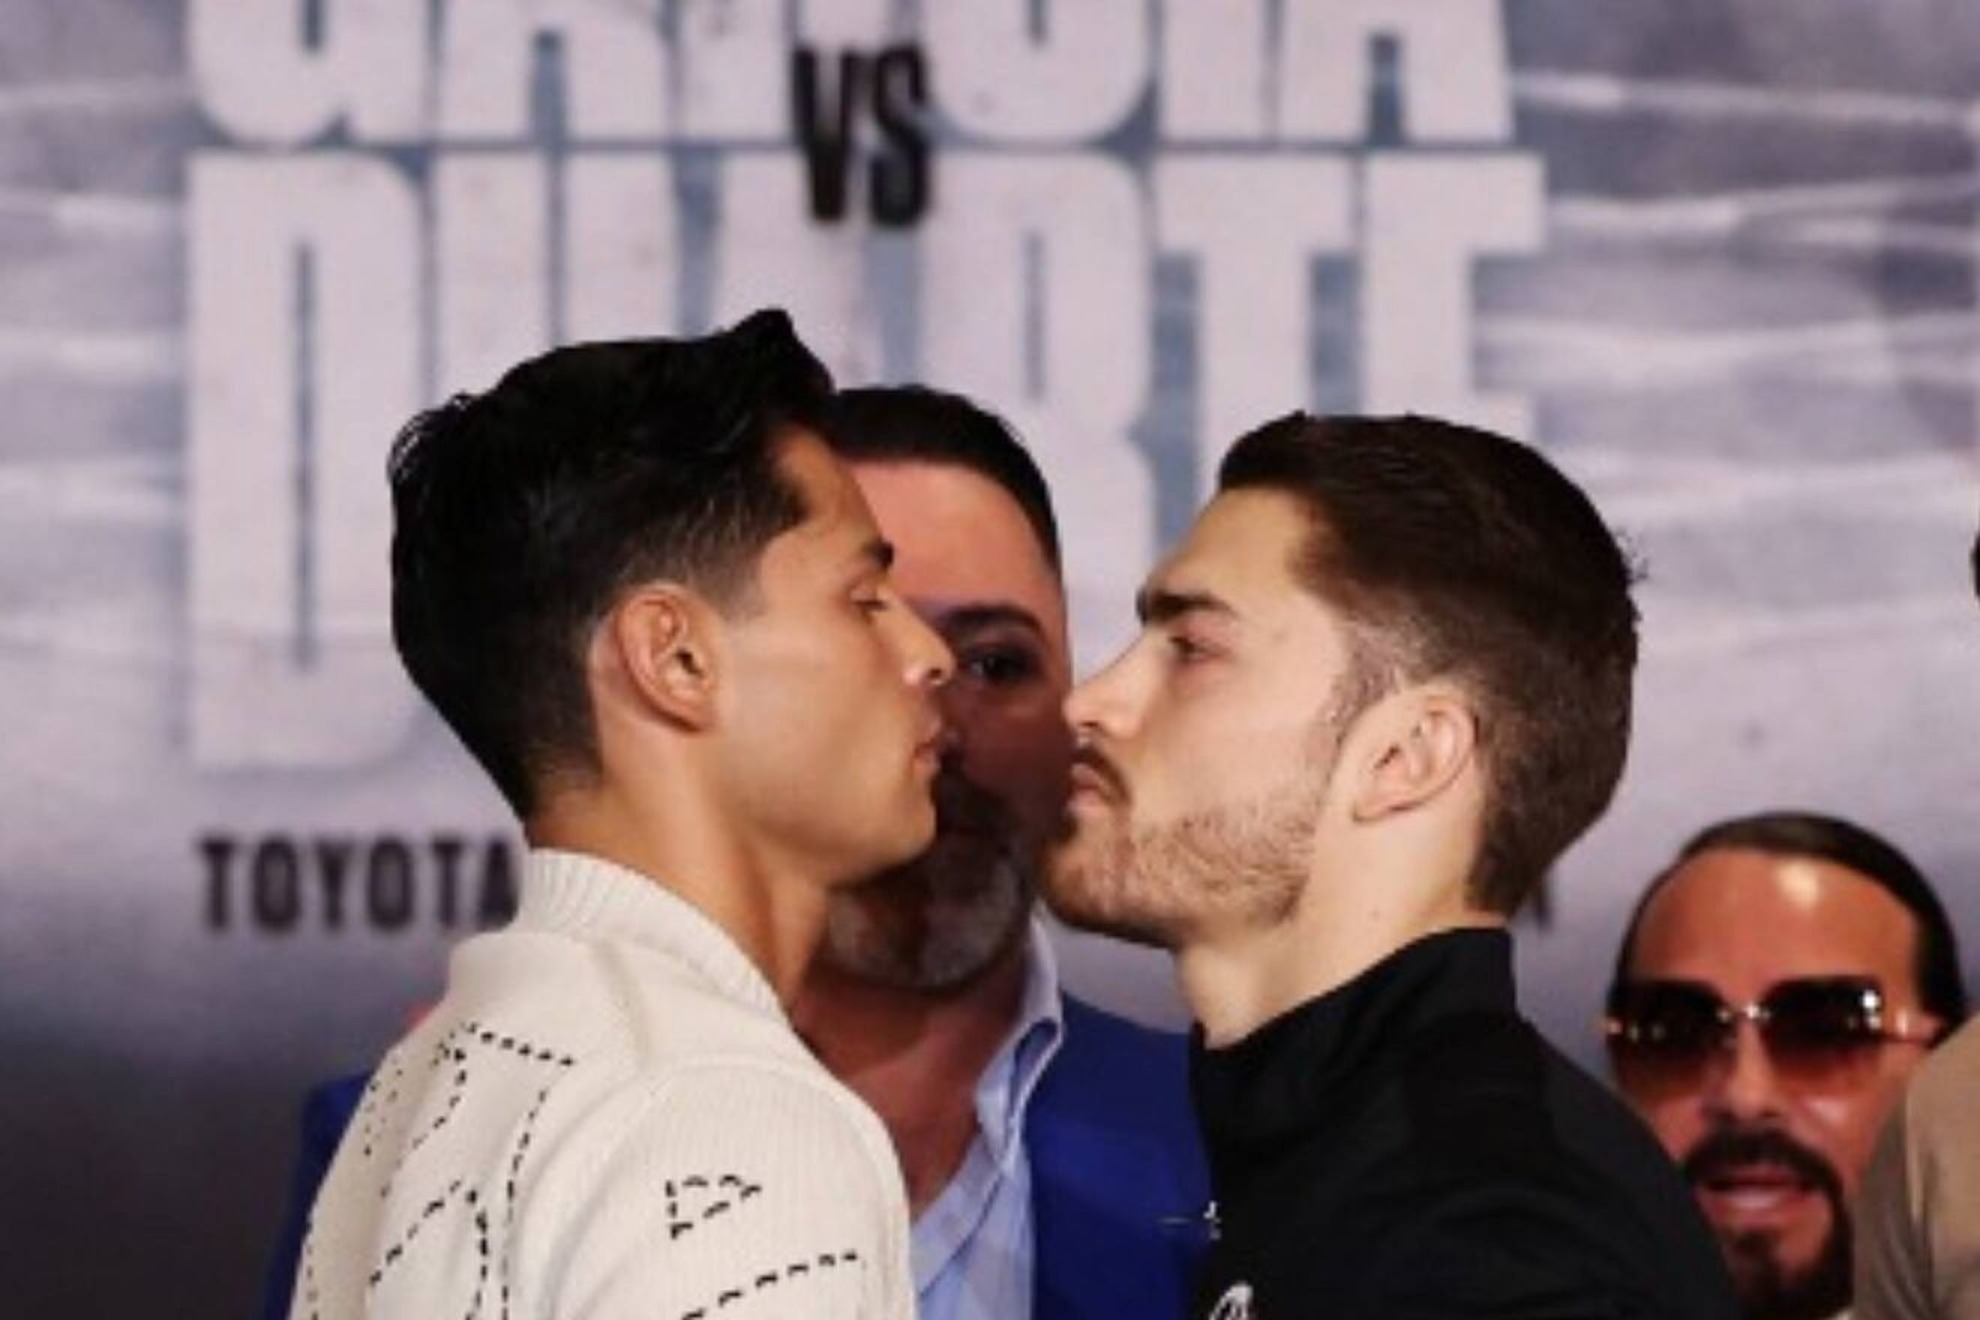 Ryan Garcia vs Oscar Duarte prediction: Who is more likely to win tomorrow?